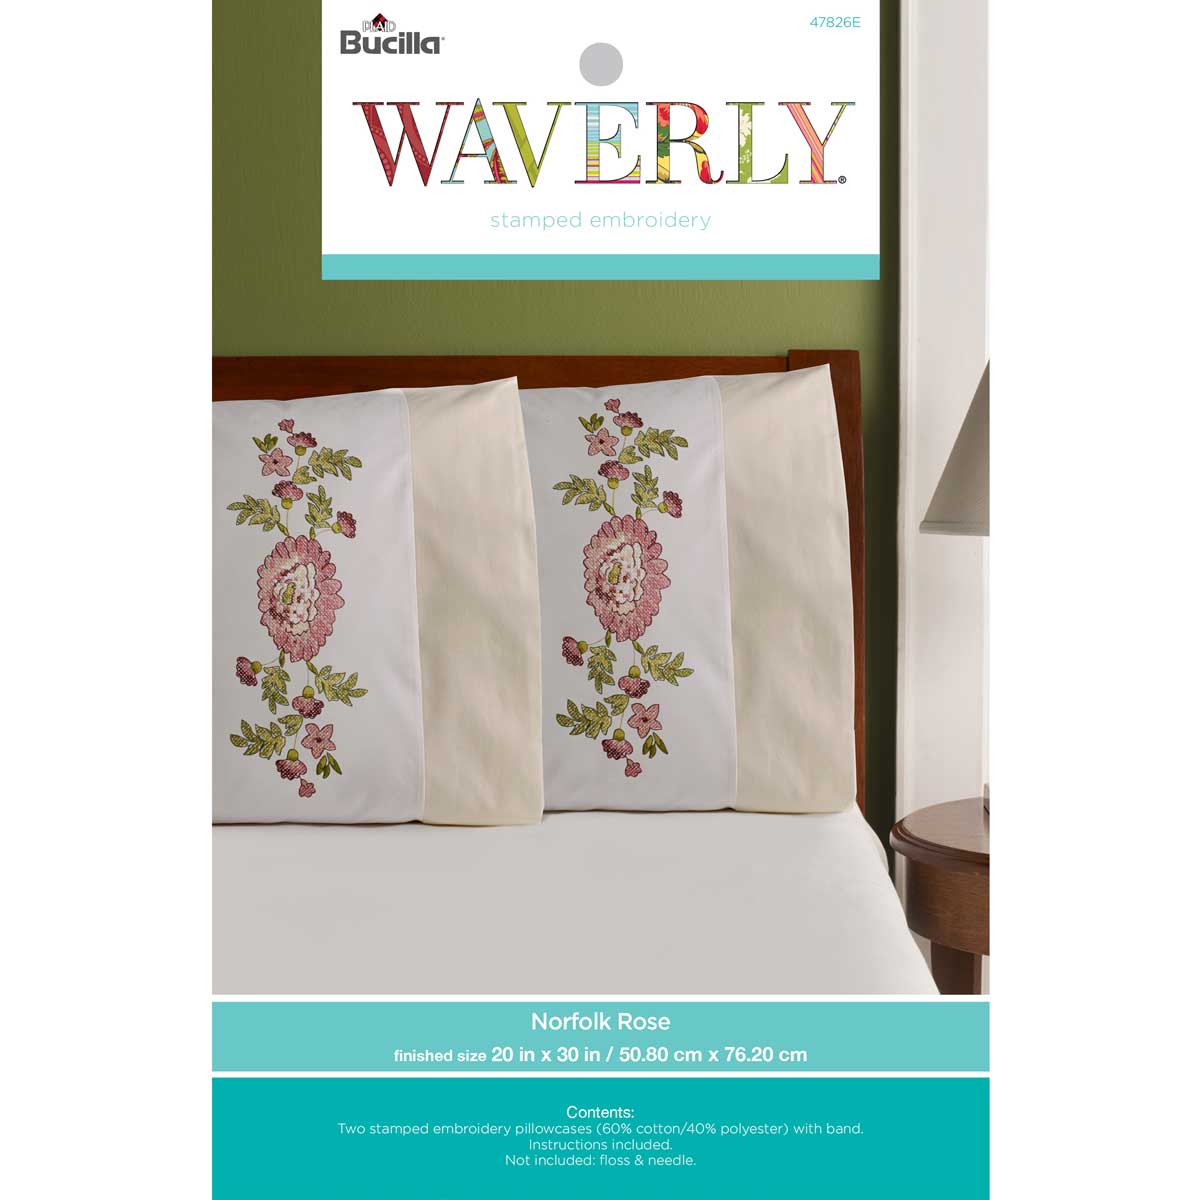 Bucilla ® Waverly ® Norfolk Rose Antique Collection Stamped Pillowcase Pair - 47826